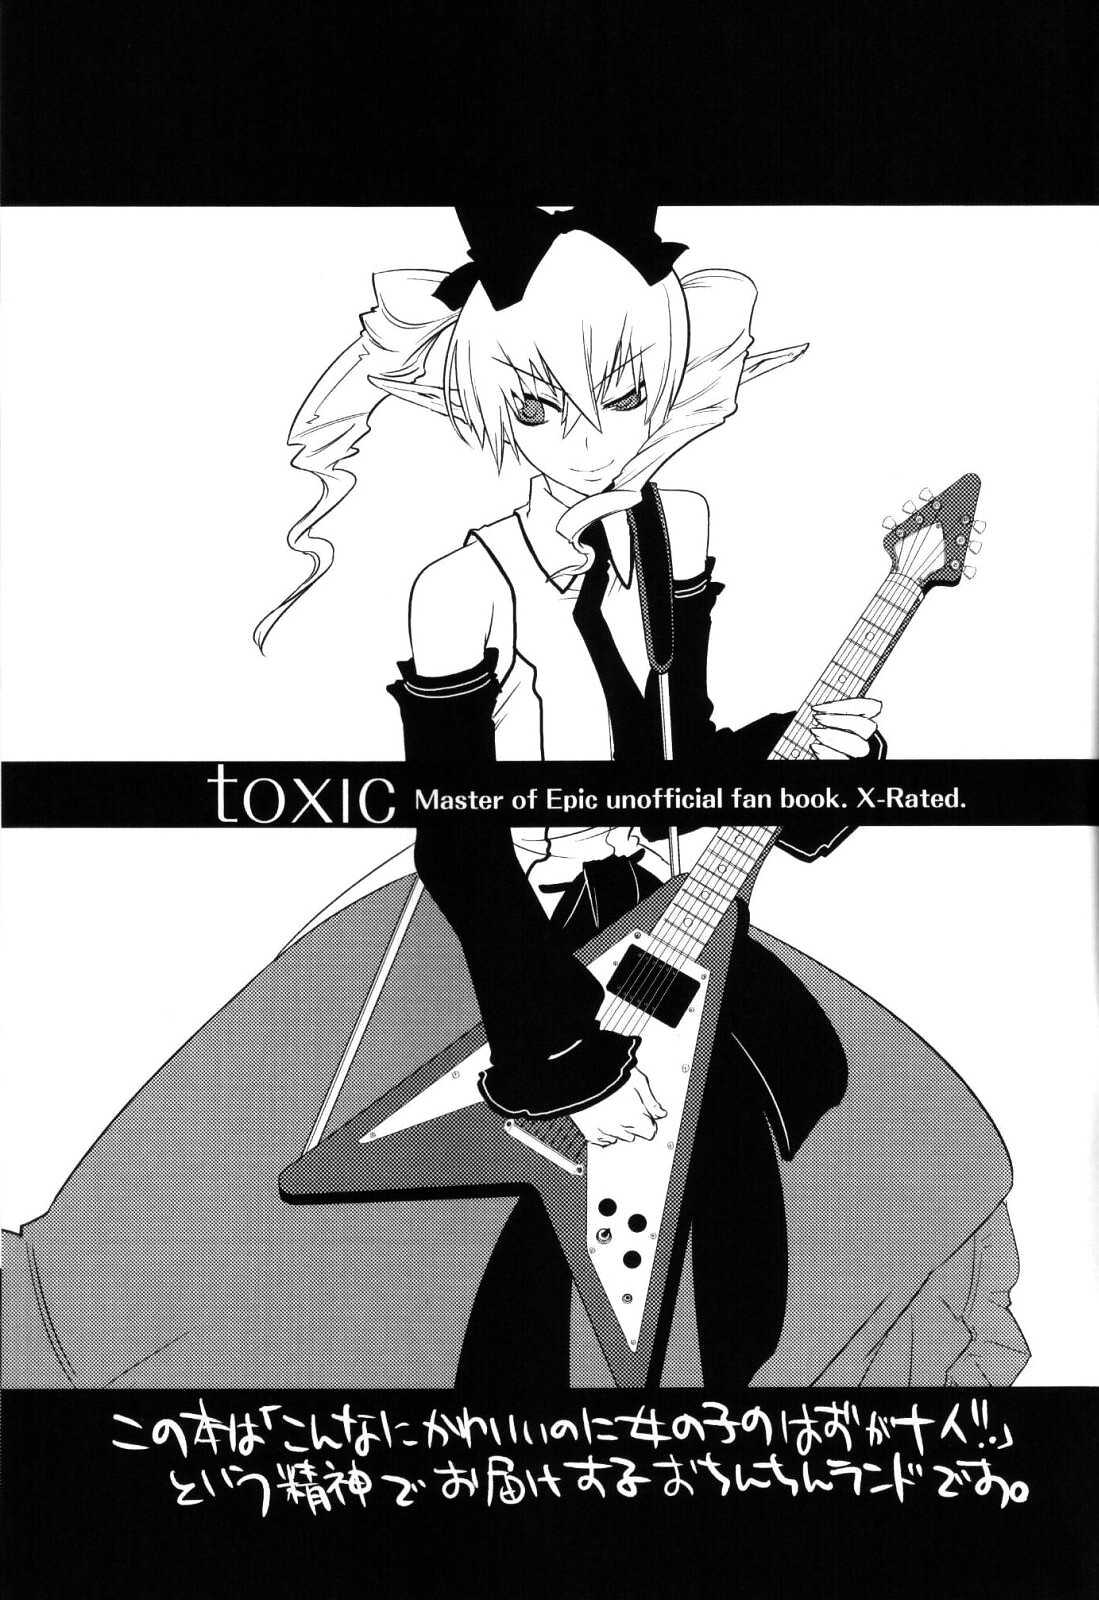 [dicca] Toxic (Master of Epic) 